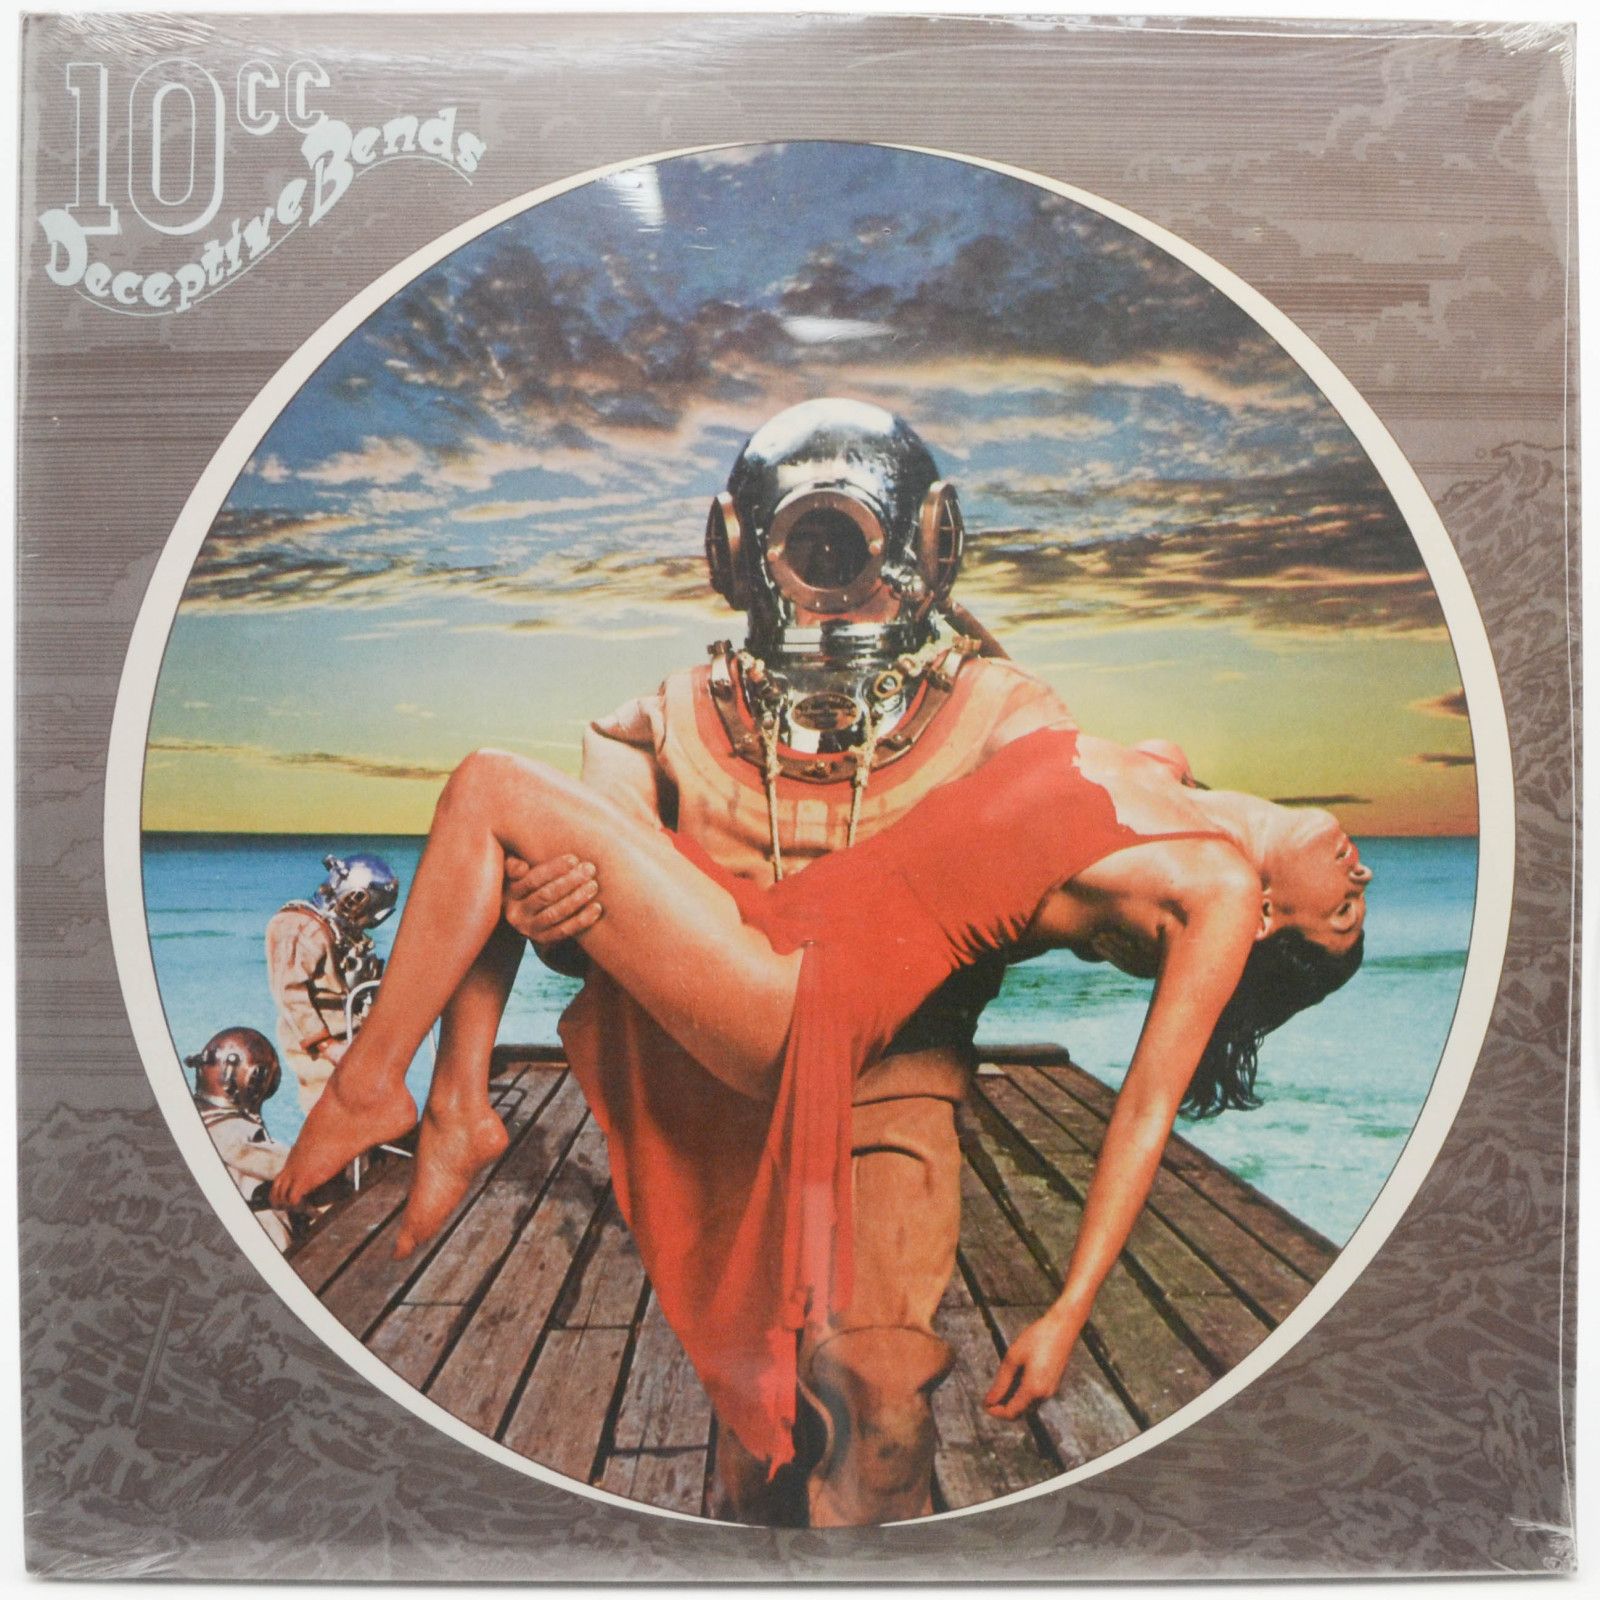 10cc — Deceptive Bends (UK), 1977